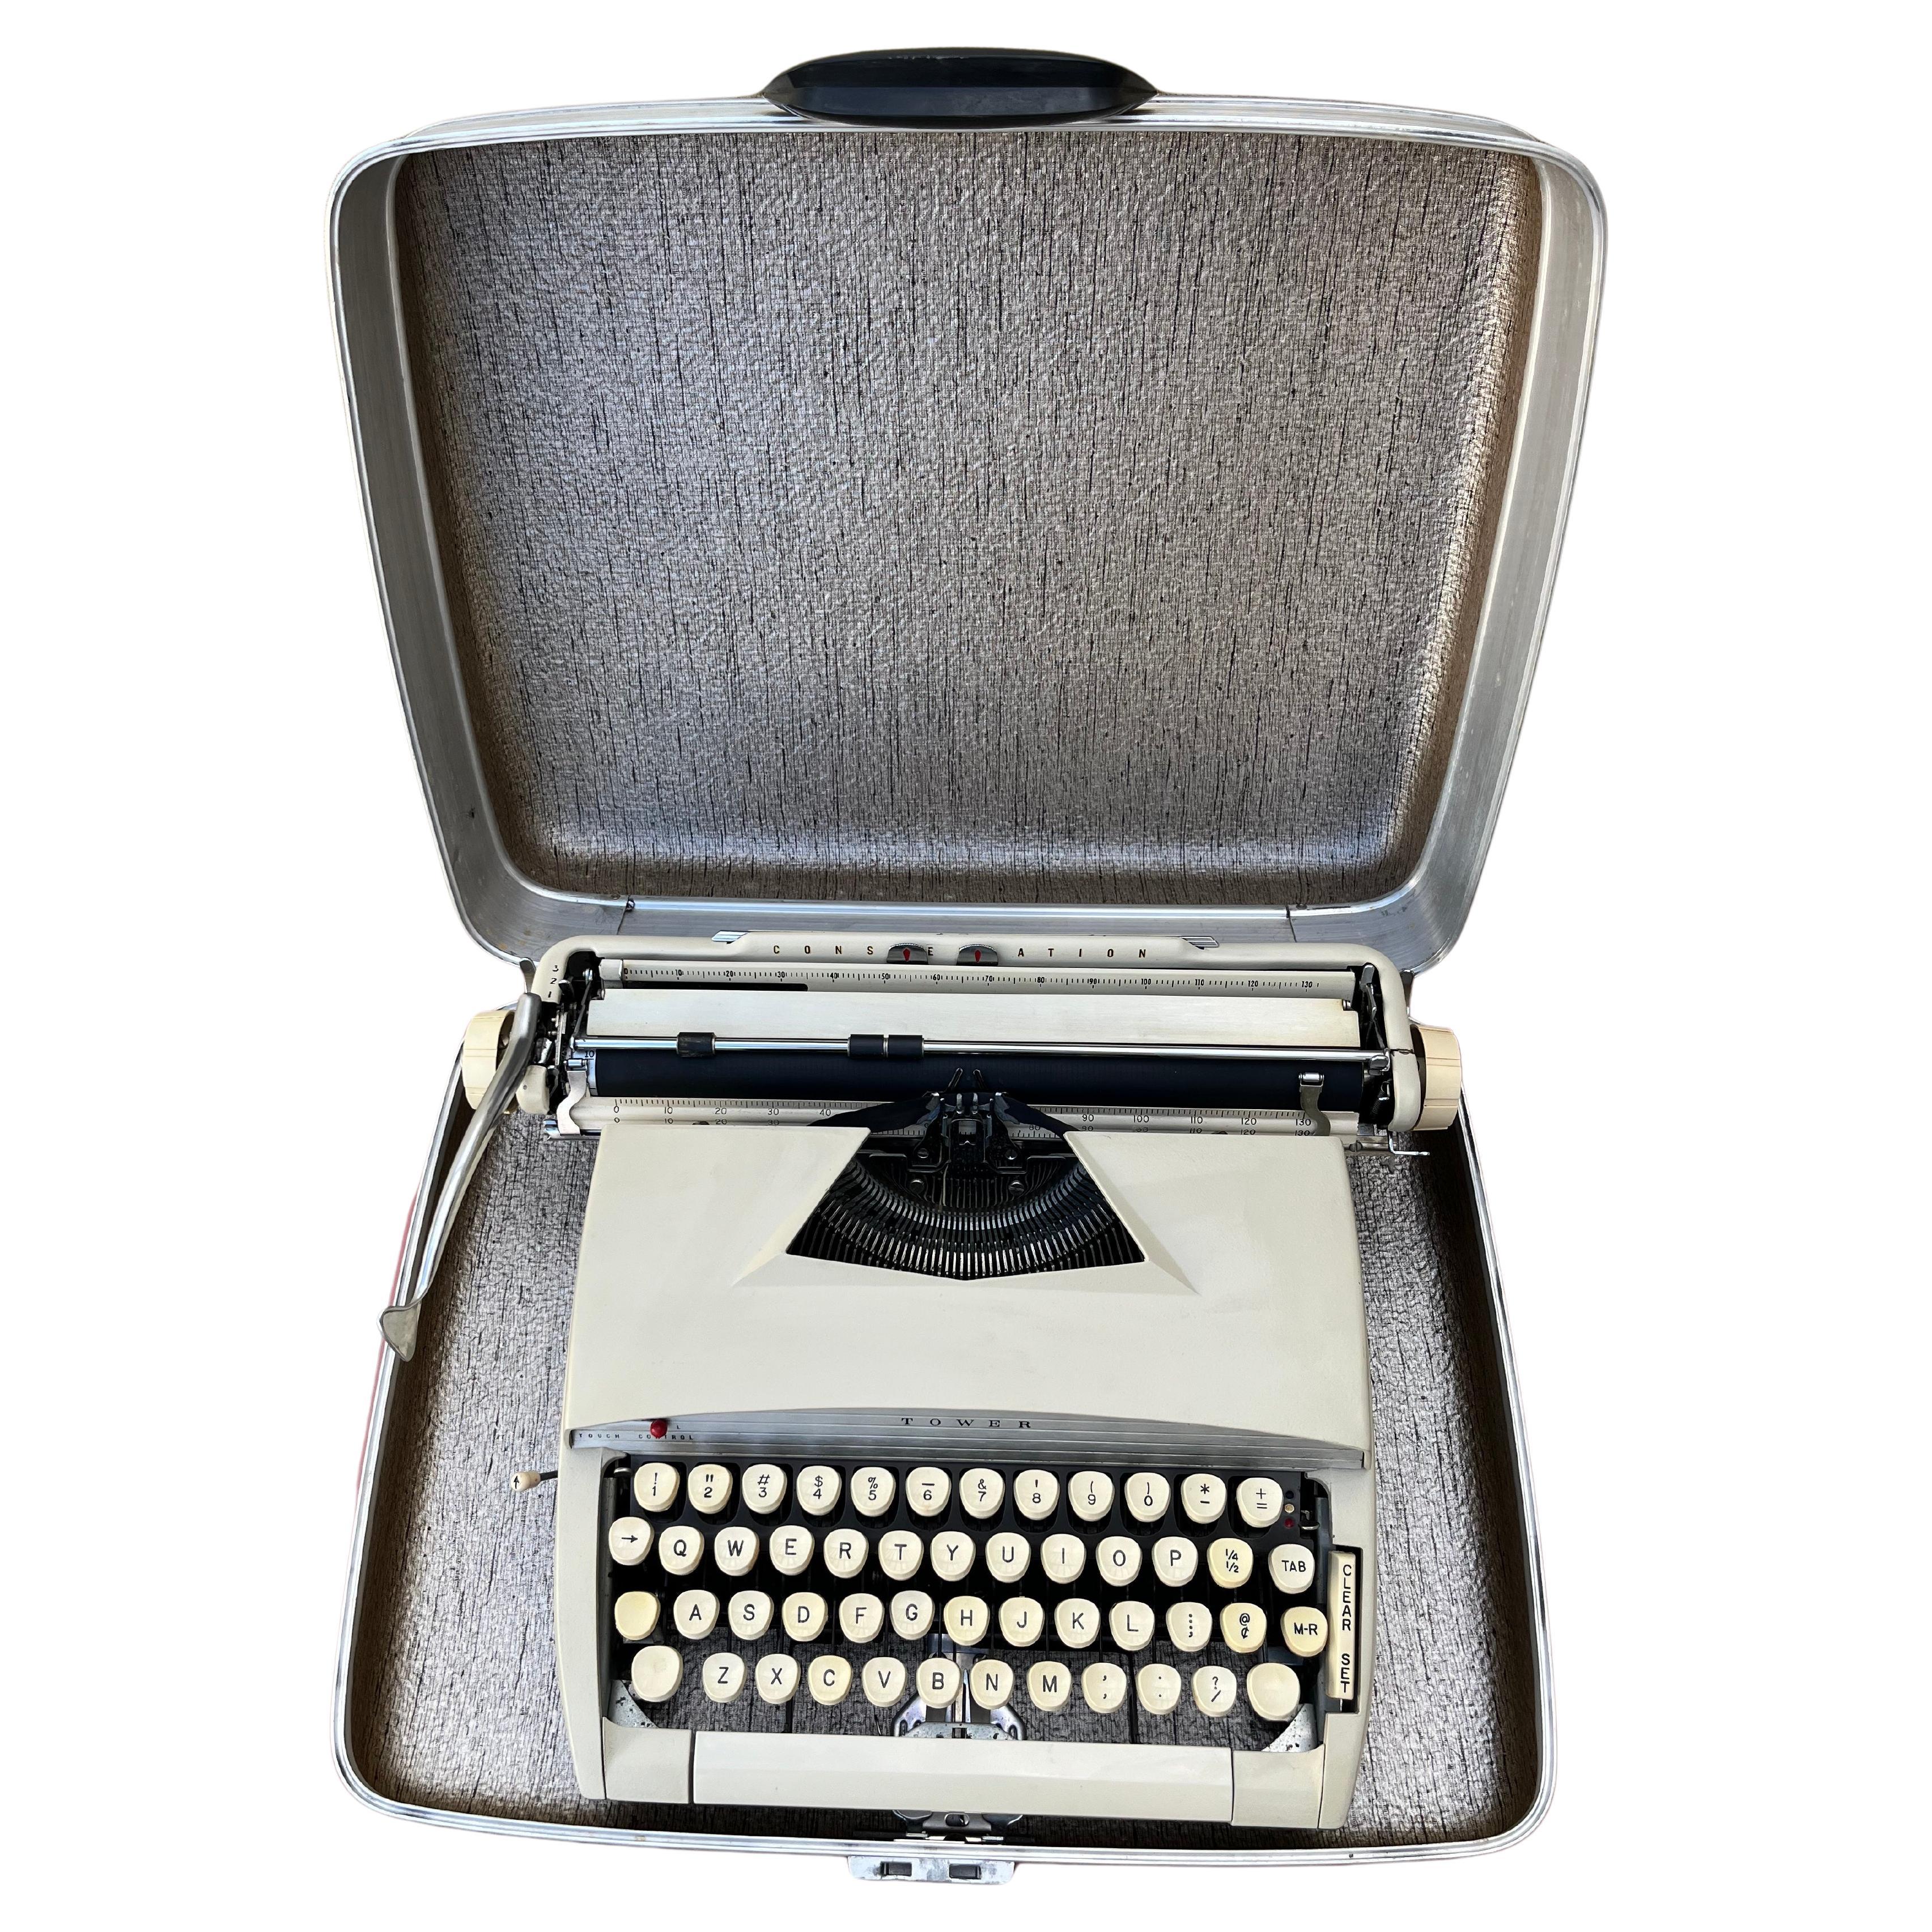 Sears Tower Constellation Portable Typewriter W/Metal Case. Circa 1960s.